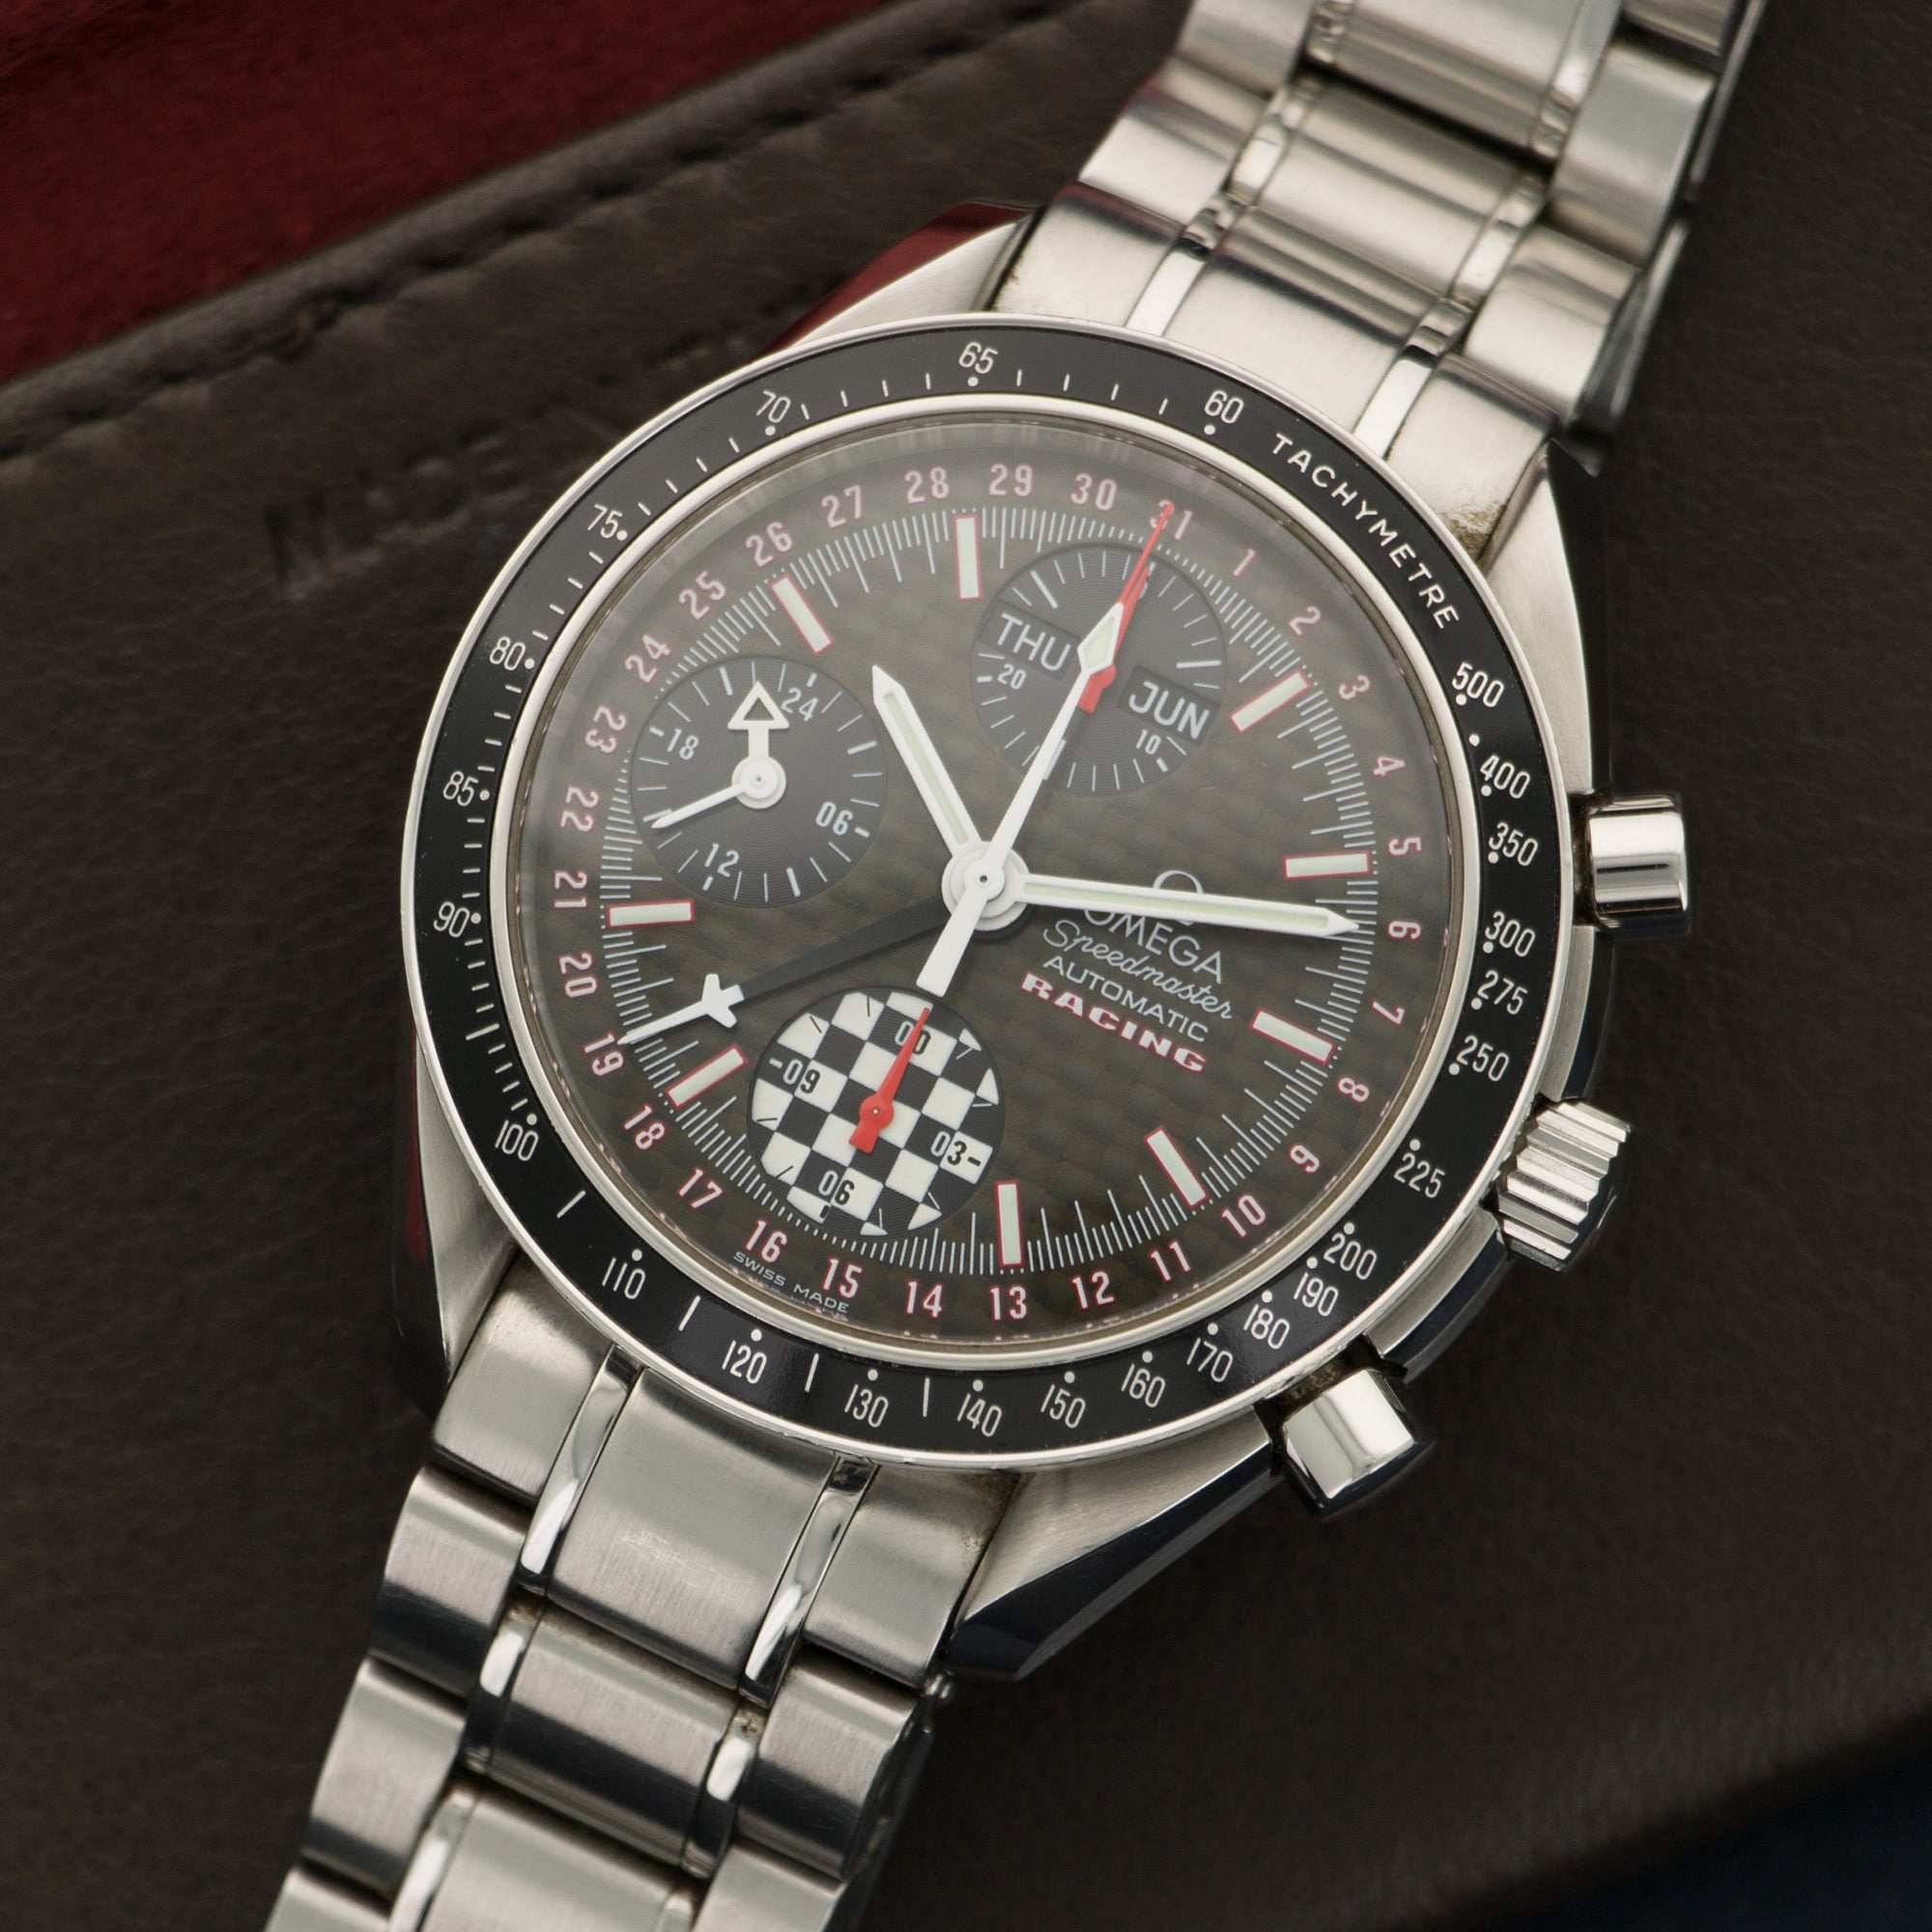 Omega - Omega Speedmaster Schumacher Chronograph Watch - The Keystone Watches